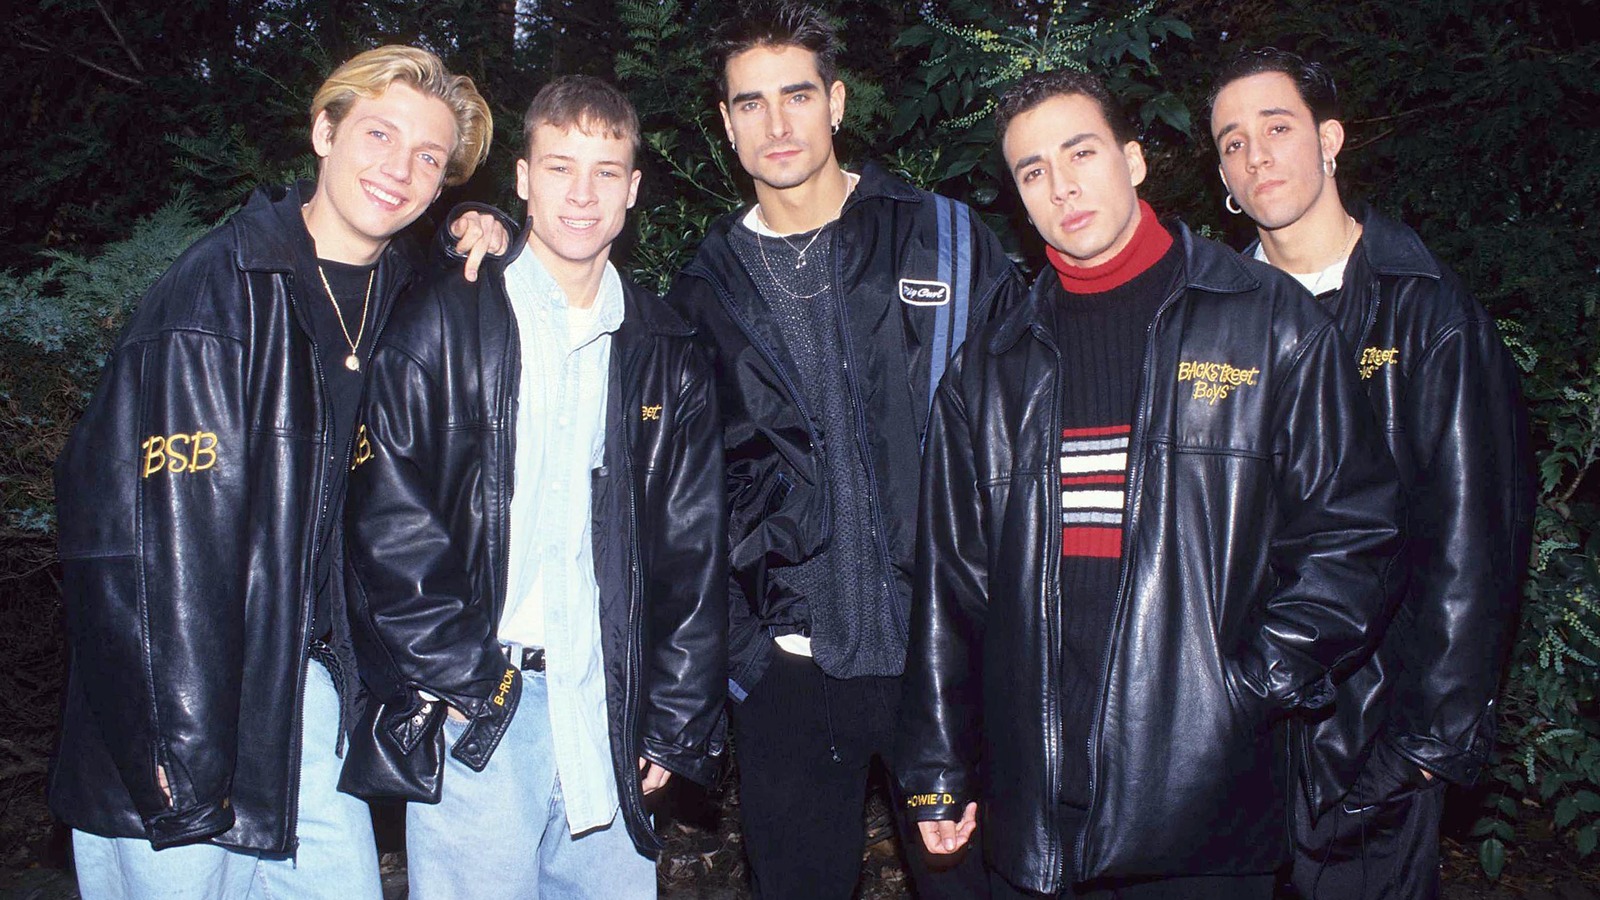 Backstreet Boys' 10 best ever songs, ranked - Smooth